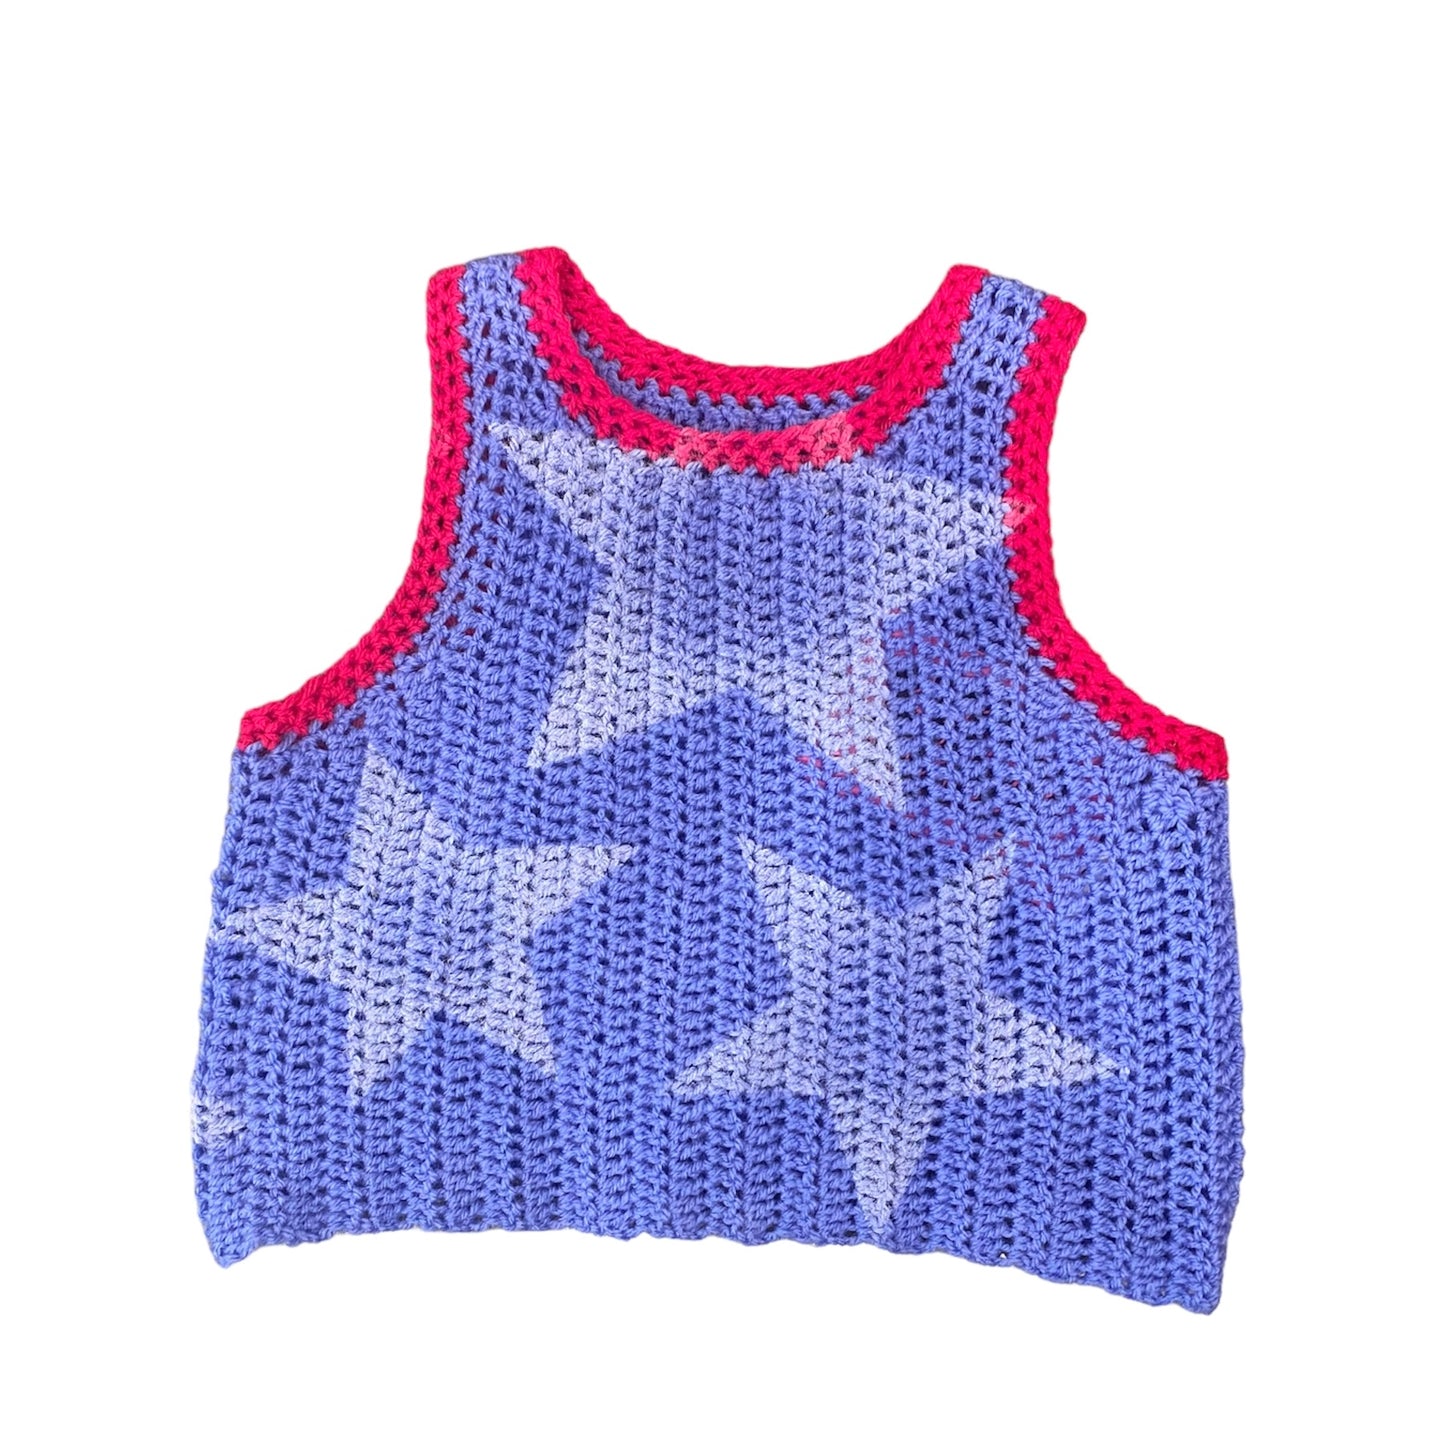 Handmade Crochet Tank with Airbrush Stars by Stoopid Chic